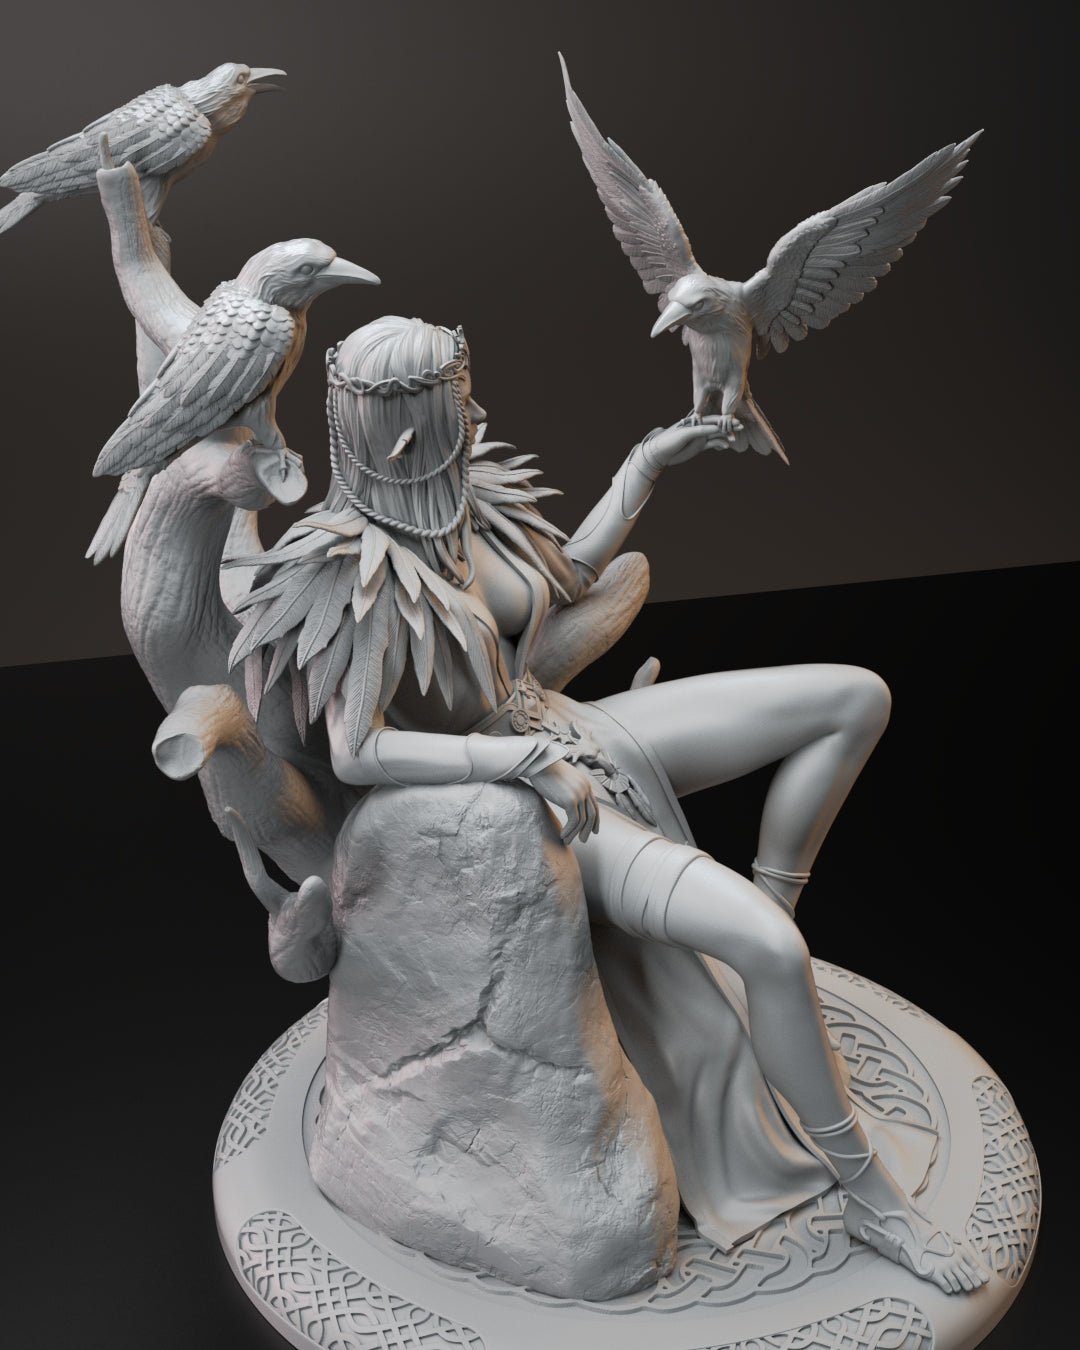 Branis Resin Scale Model | 3D Printed | Fun Art | Figurine by Gsculpt Art